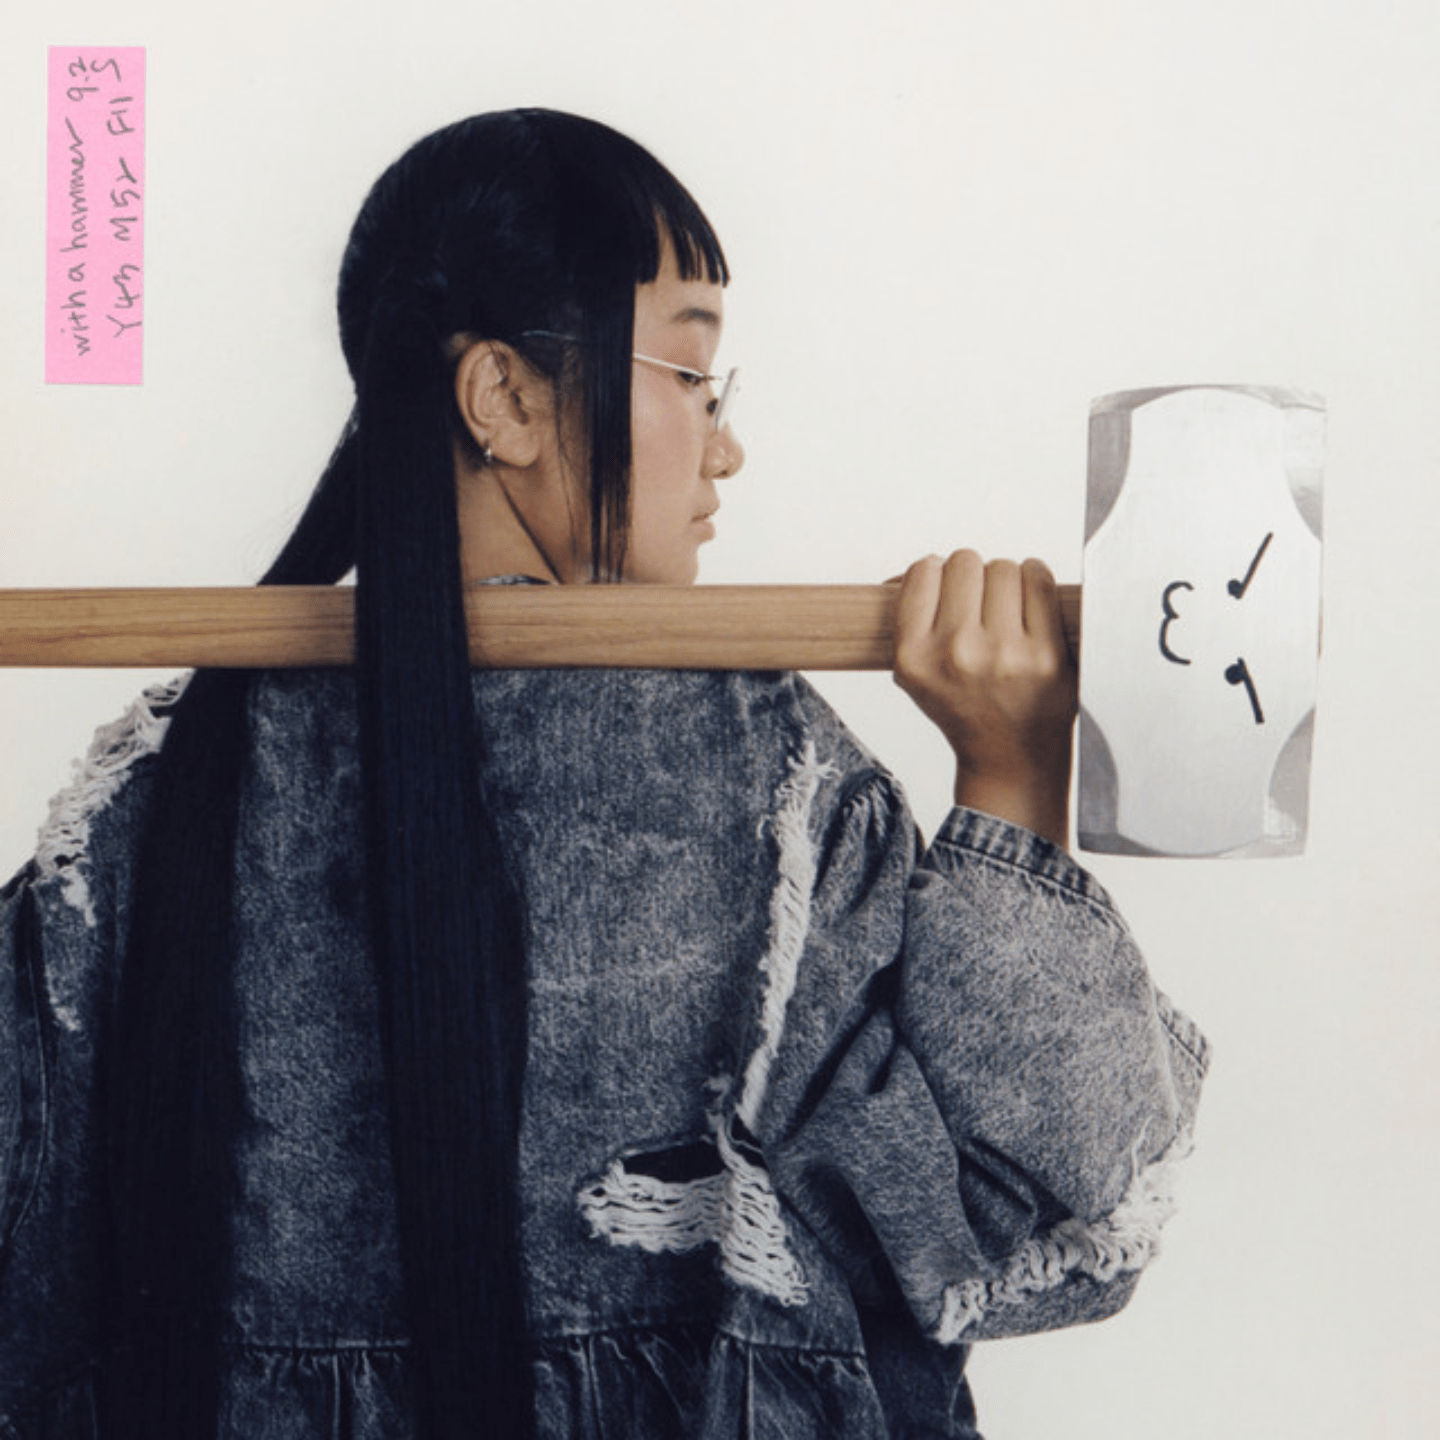 YAEJI - With A Hammer LP Hot Pink vinyl